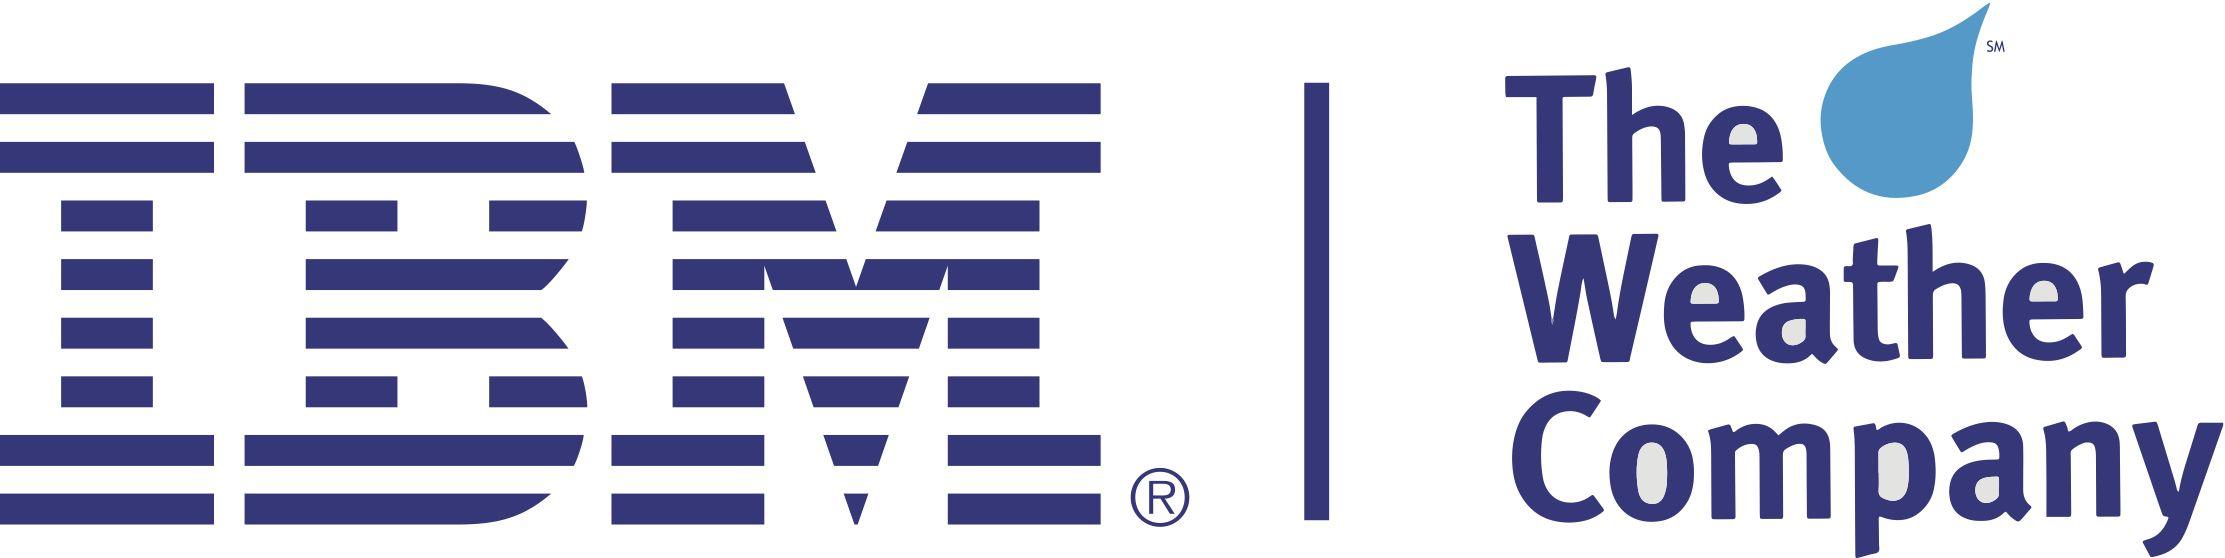 First IBM Logo - IBM News room - IBM and The Weather Company Logo - United States